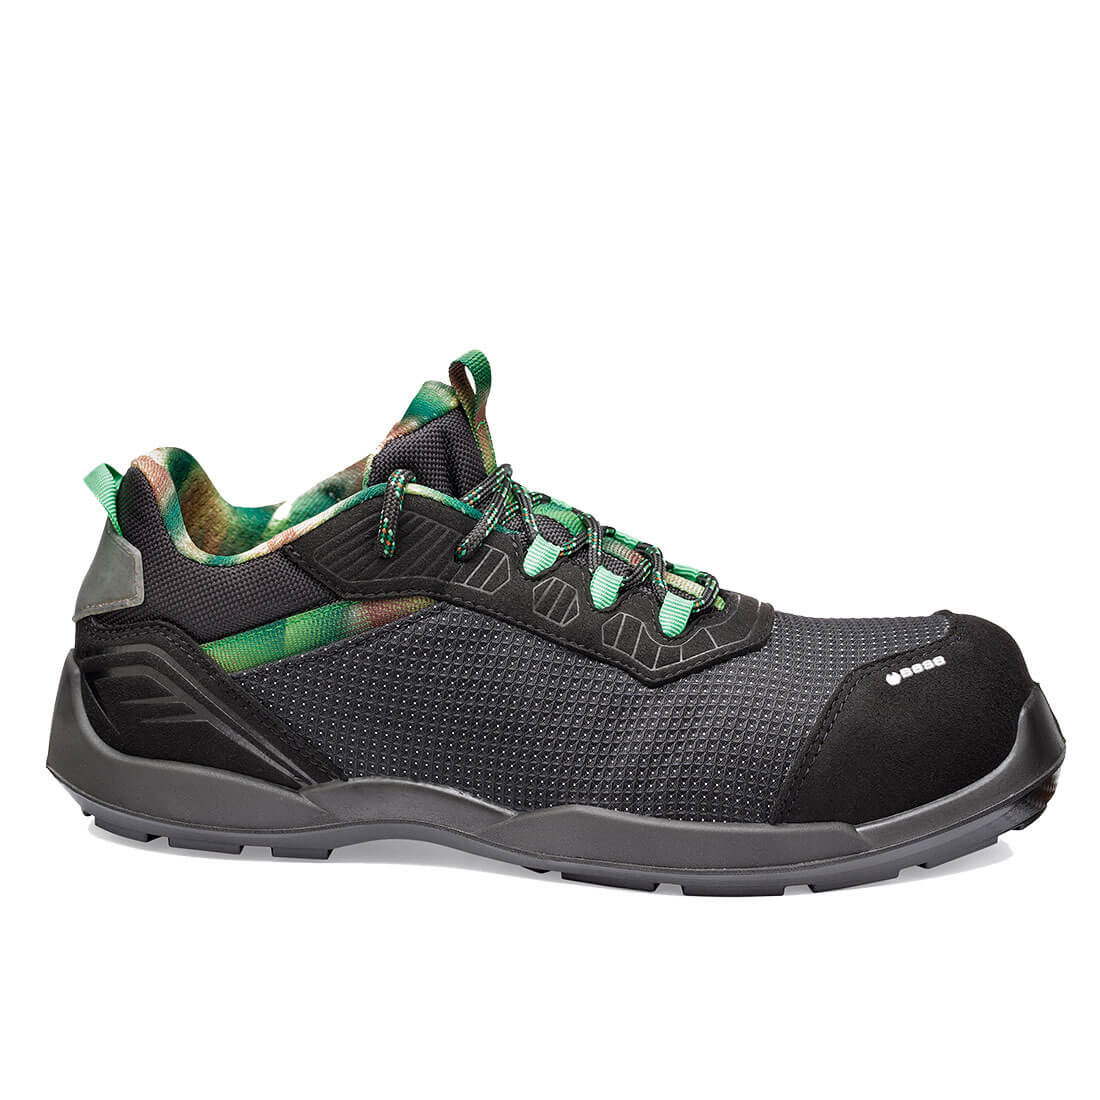 Pantofi de protectie YELLOWSTONE S3 - Incaltaminte de protectie | Bocanci, Pantofi, Sandale, Cizme